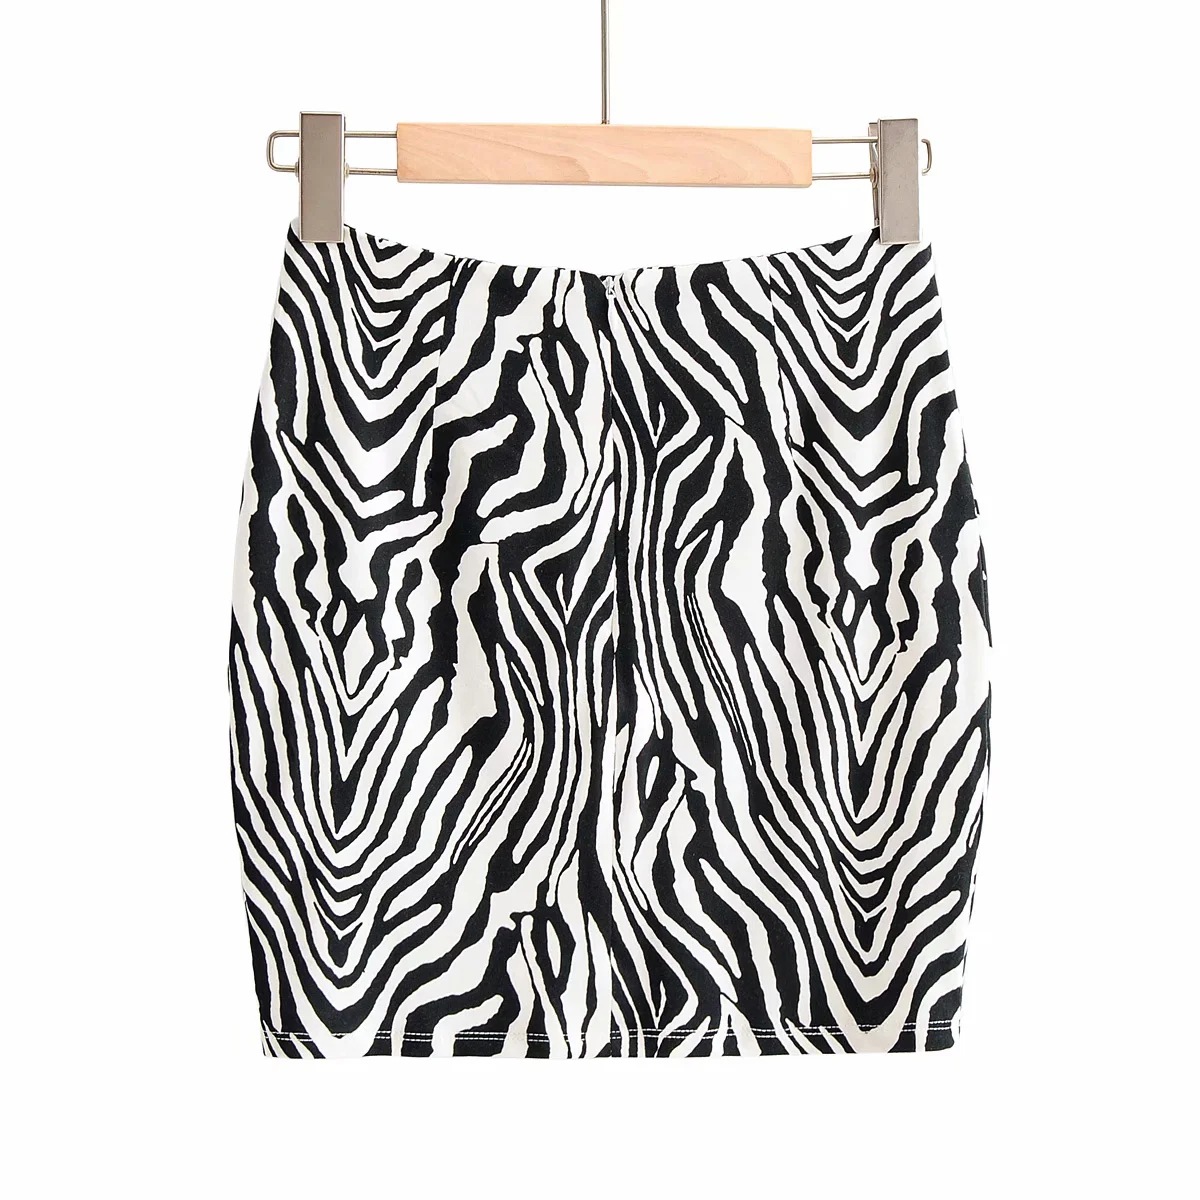 high waist leopard print mini skirt NSAC14995